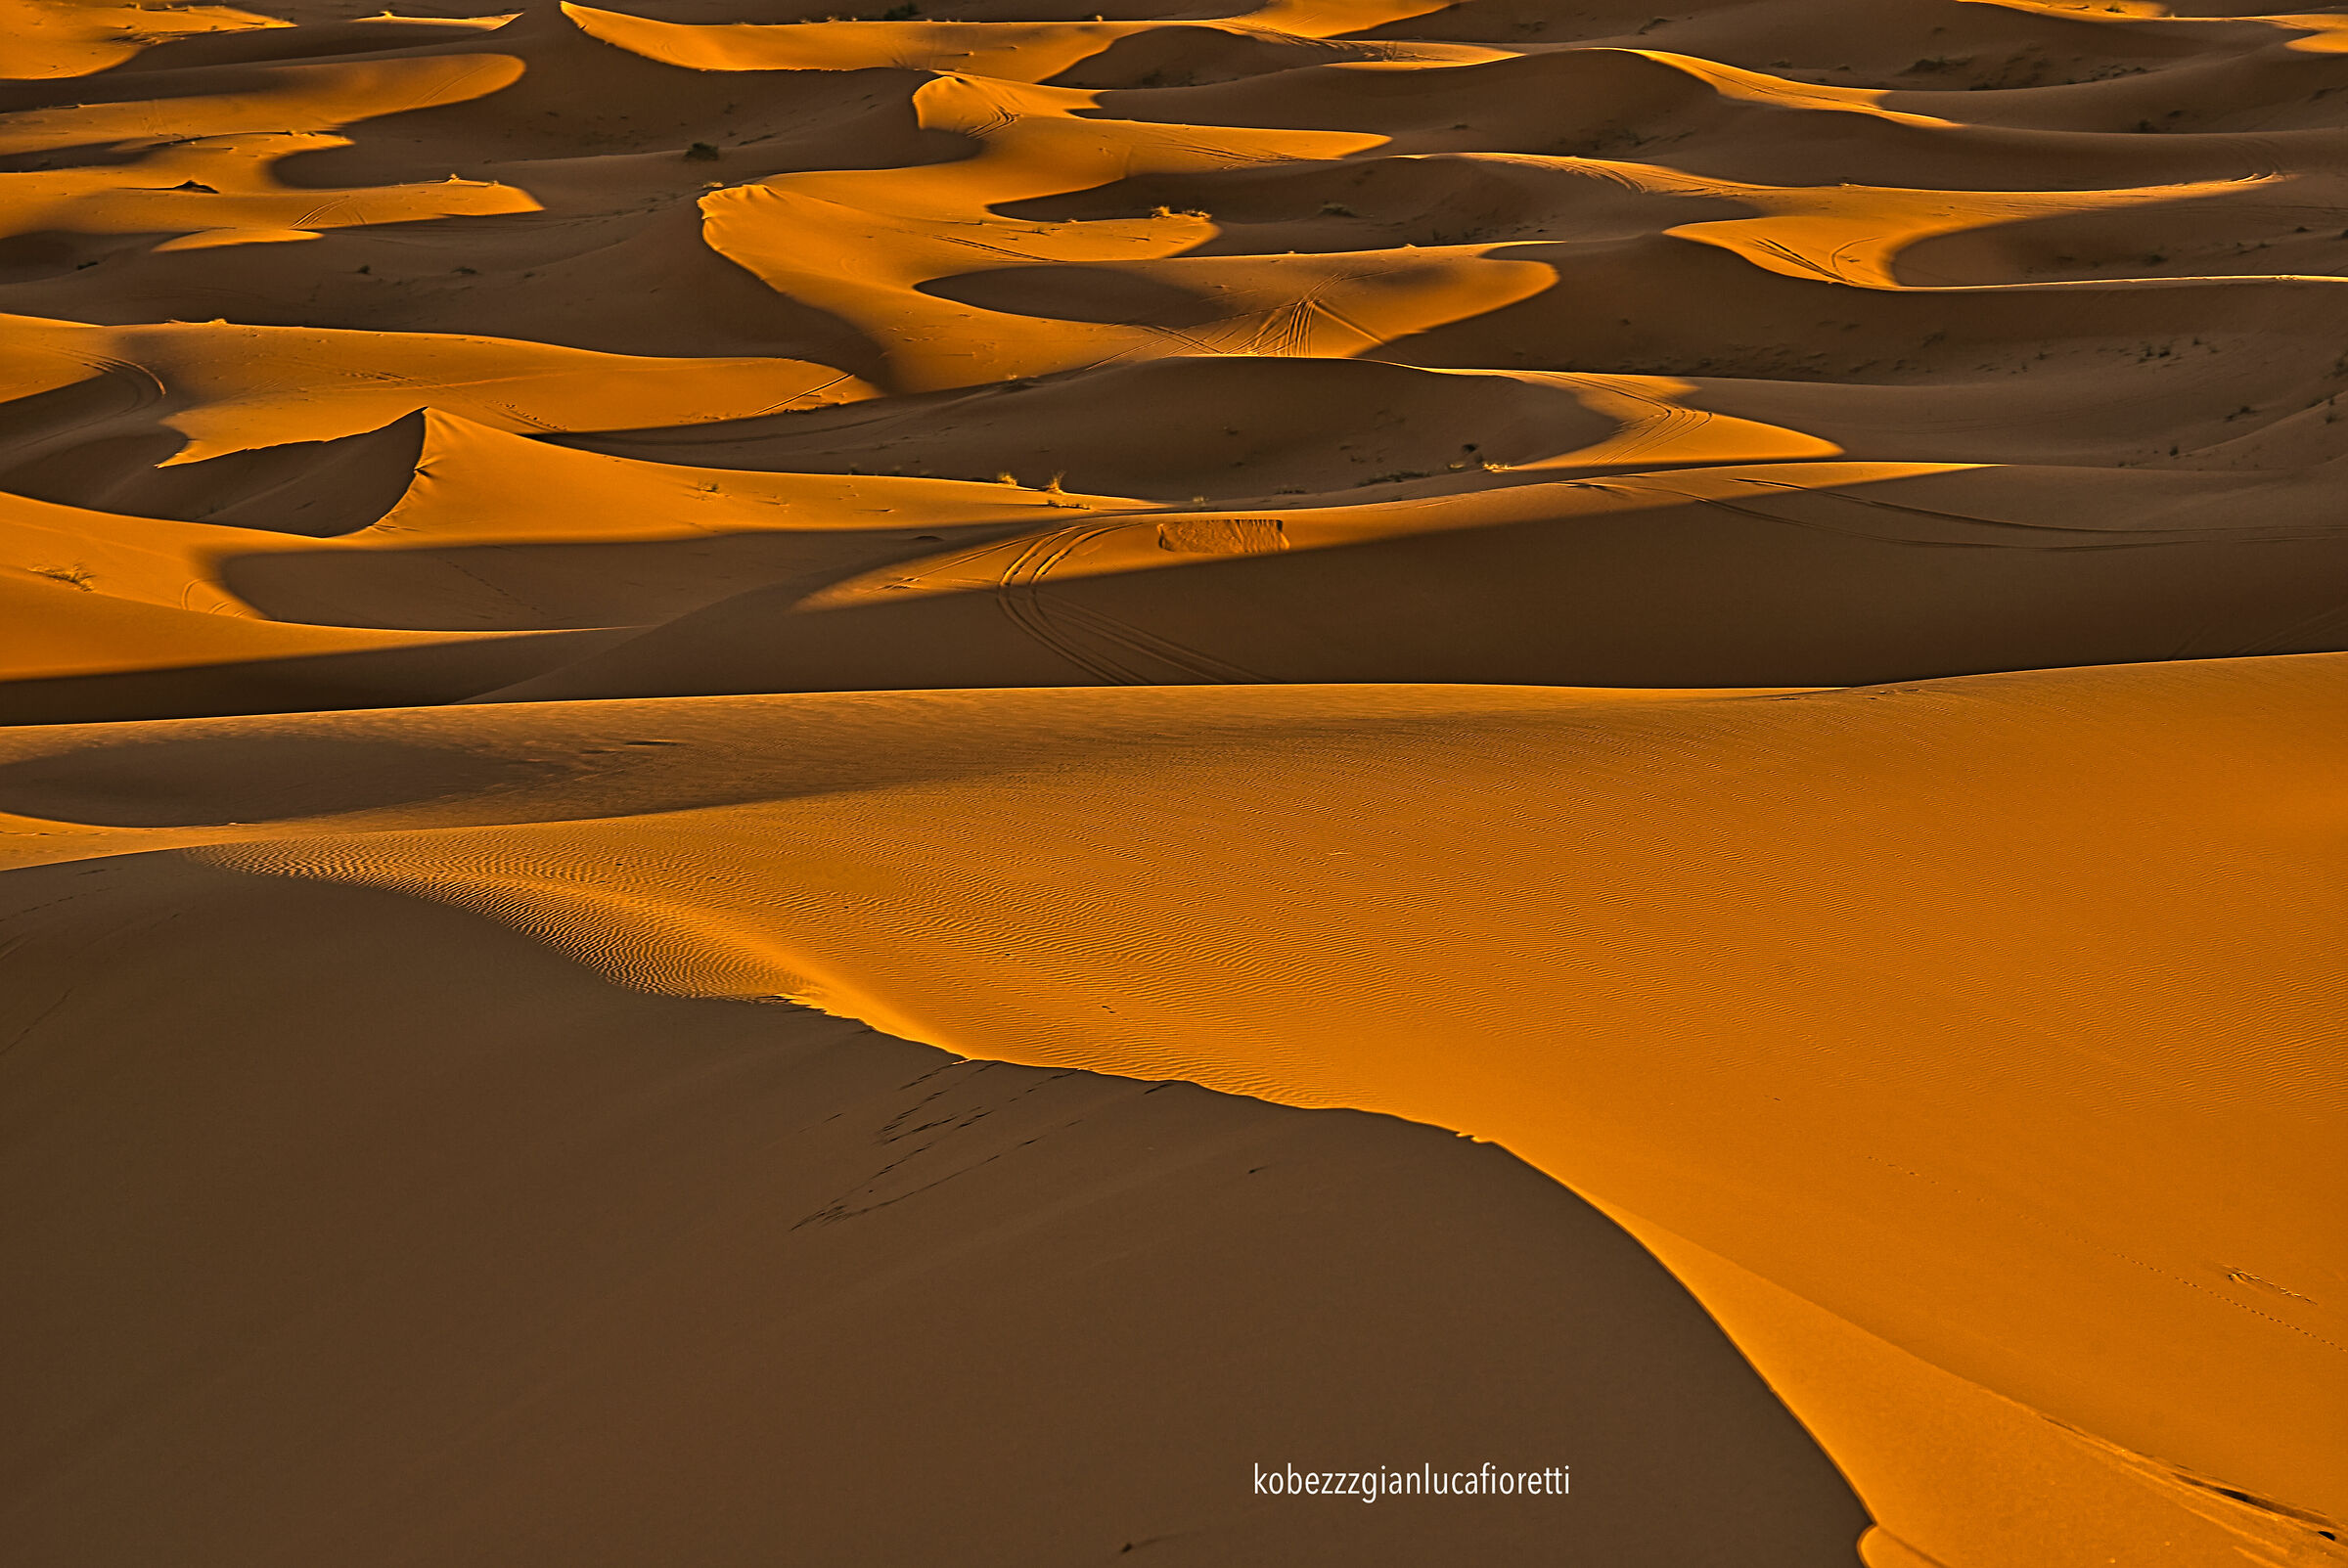 The dunes of the Sahara...